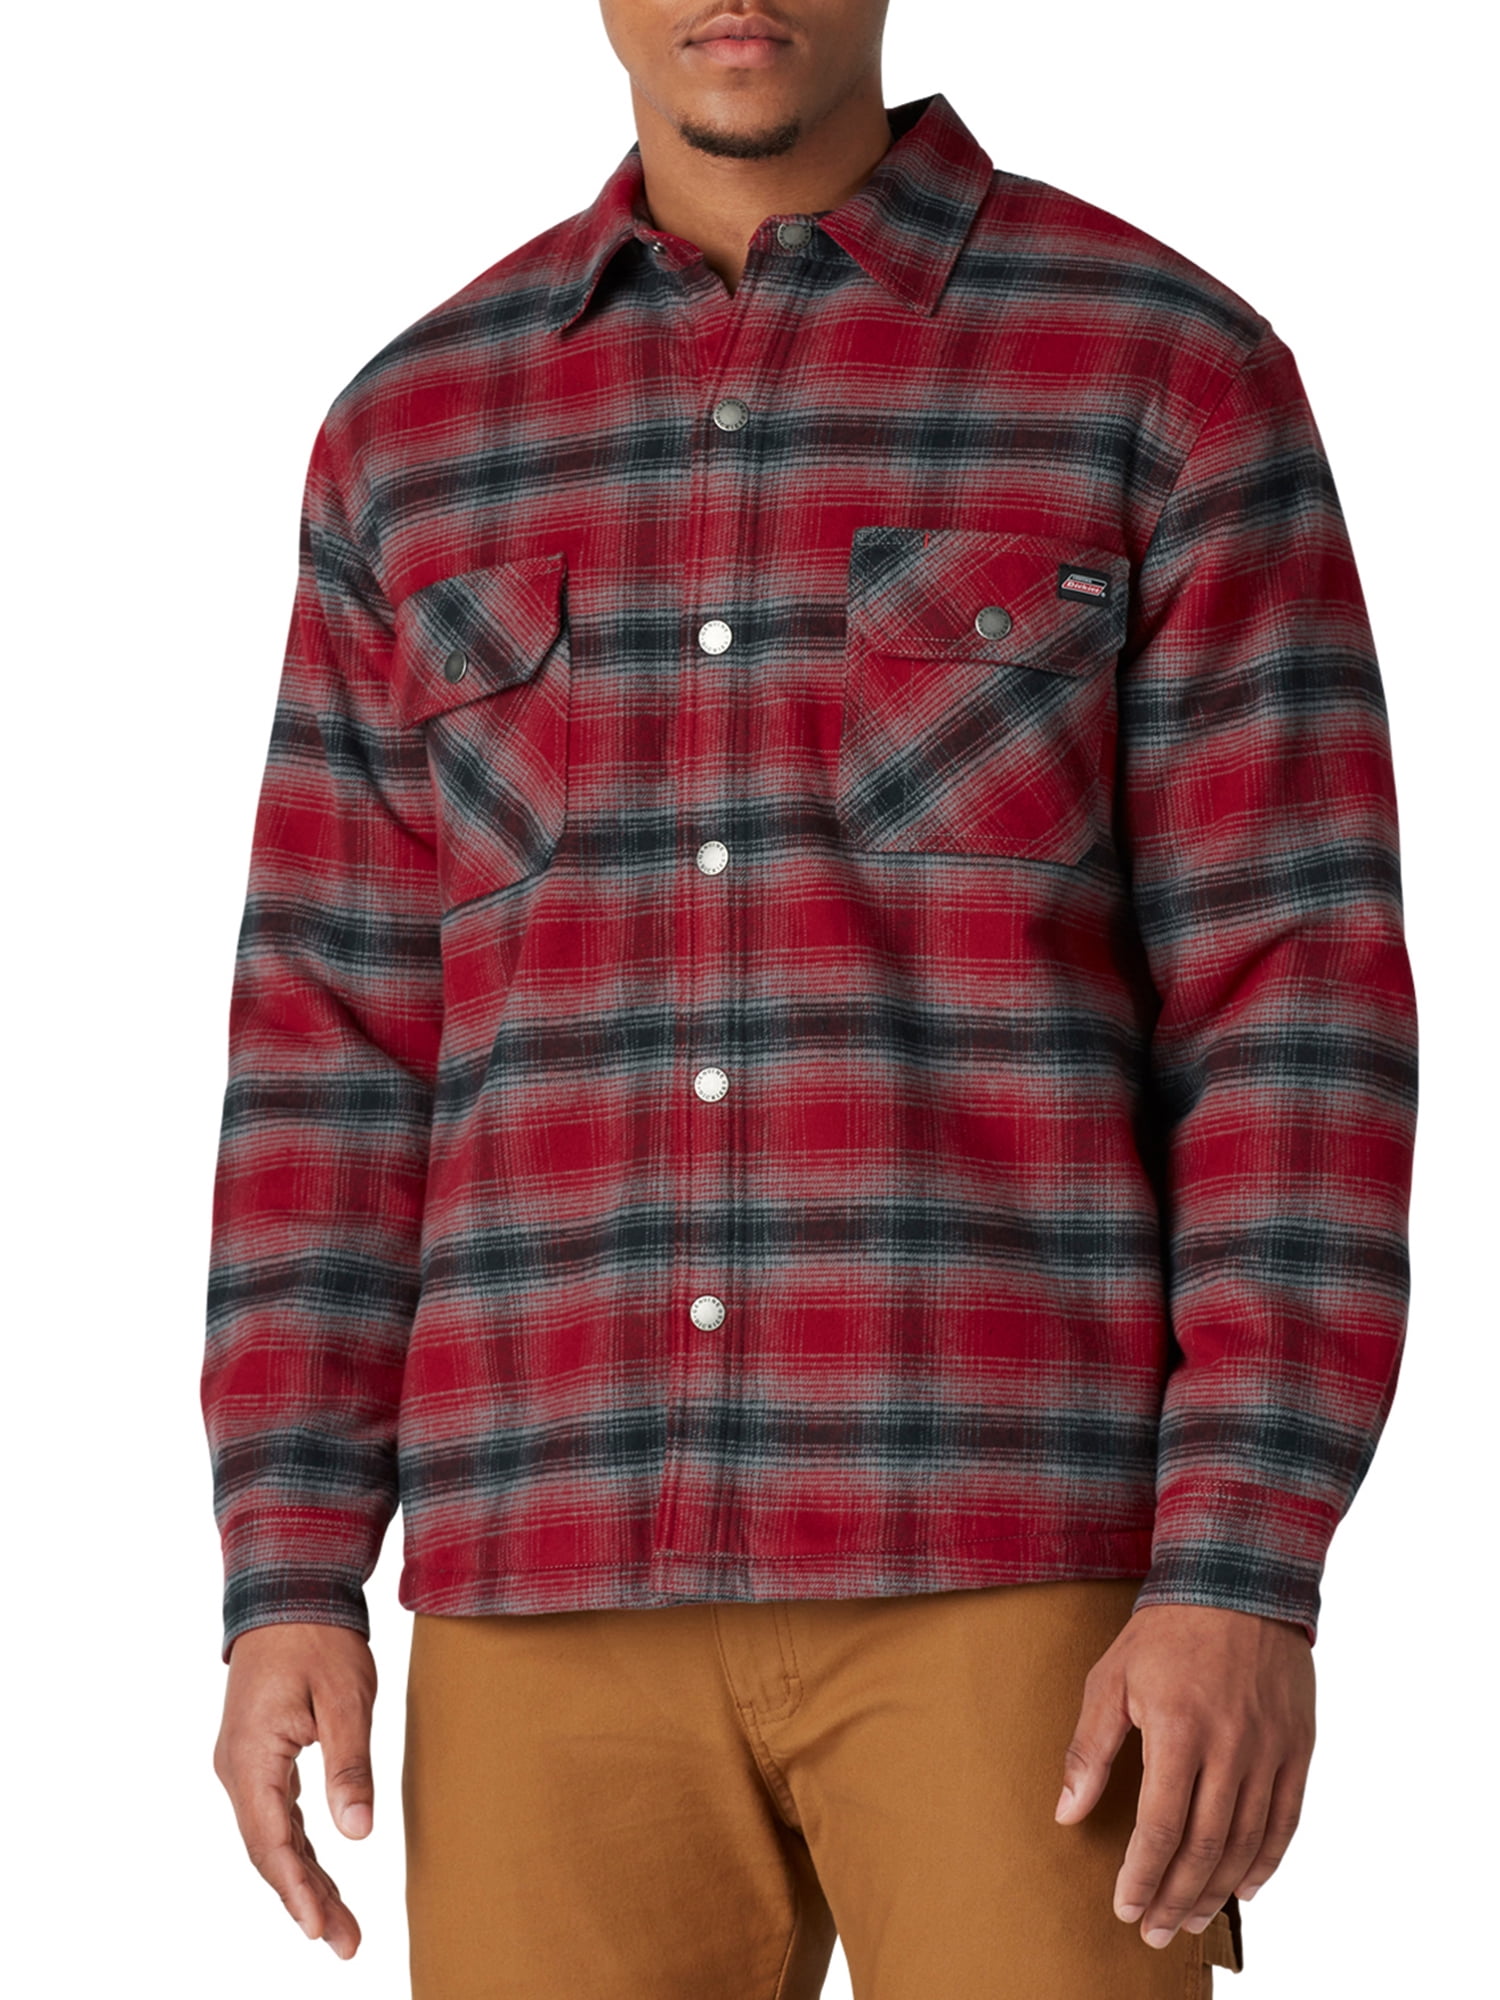 Men's Flannel Shirt Jacket Size Medium  Red Buffalo Outdoor Life 